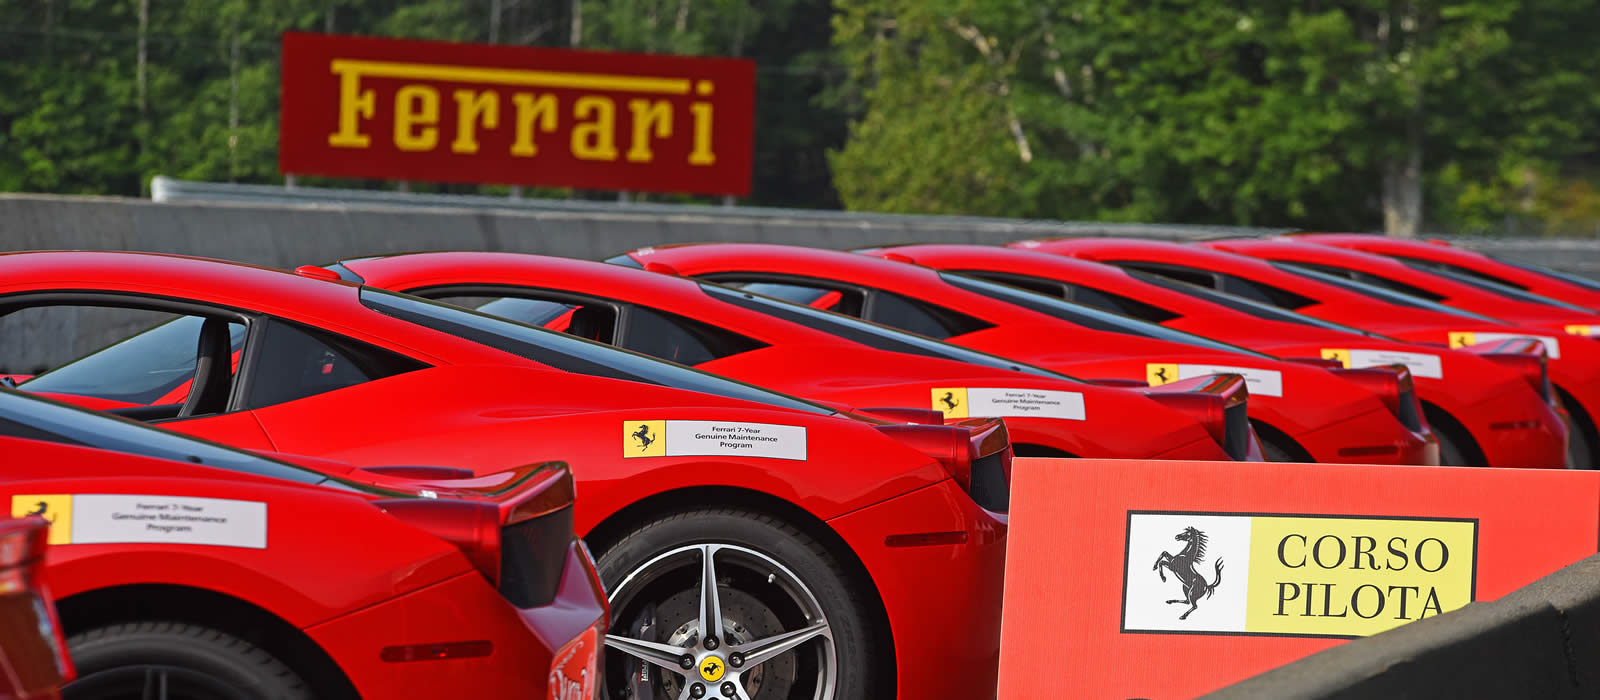 Видео – школа вождении Ferrari Corso Pilota